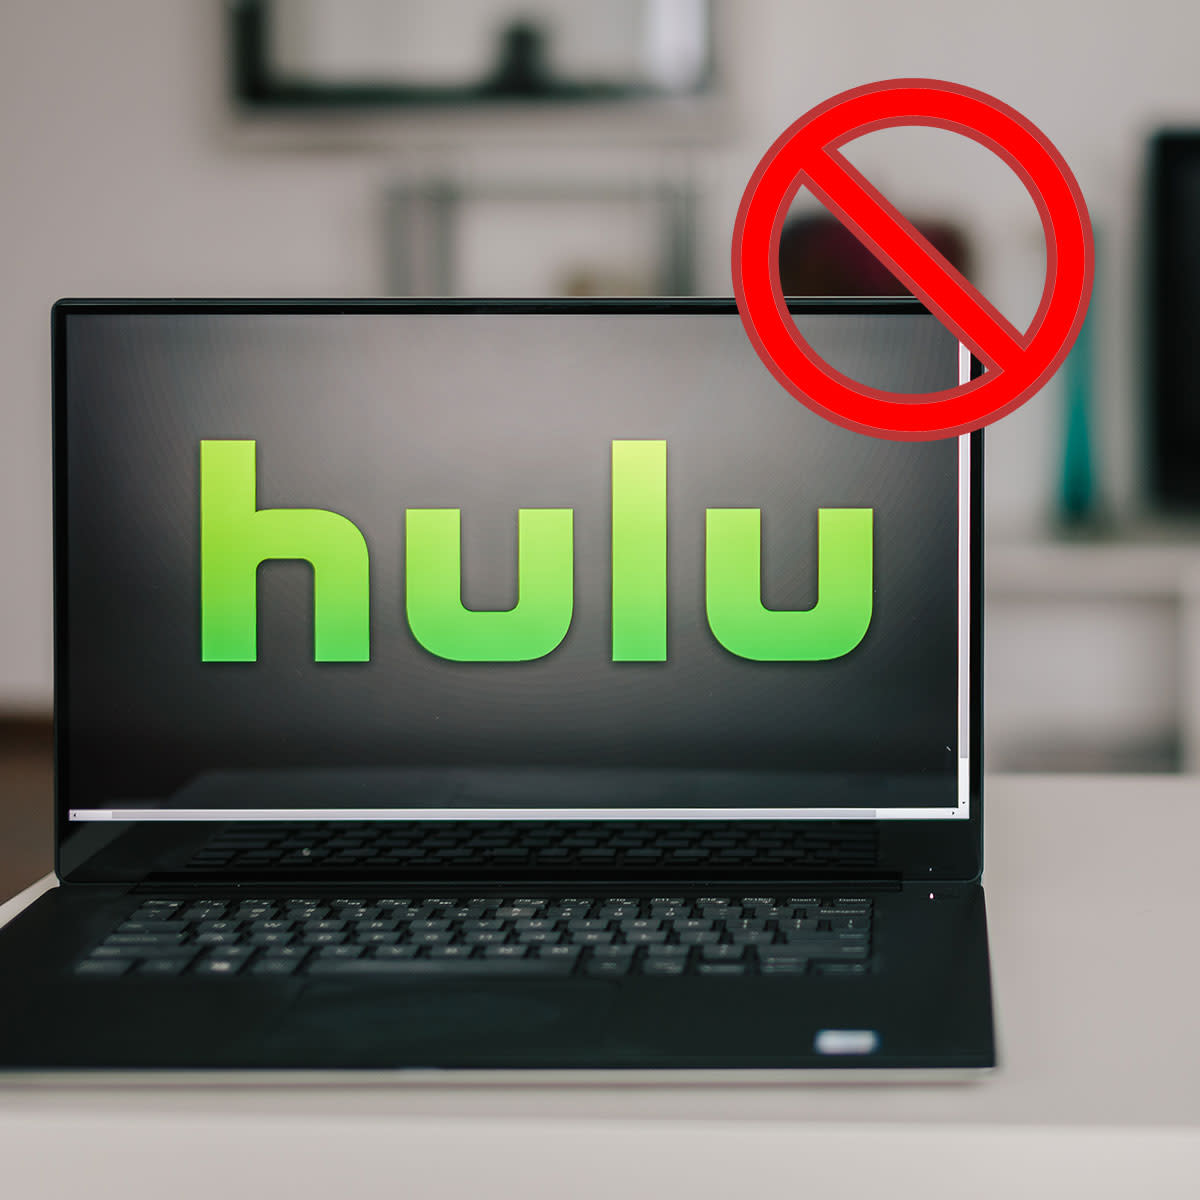 Hulu on laptop cancellation